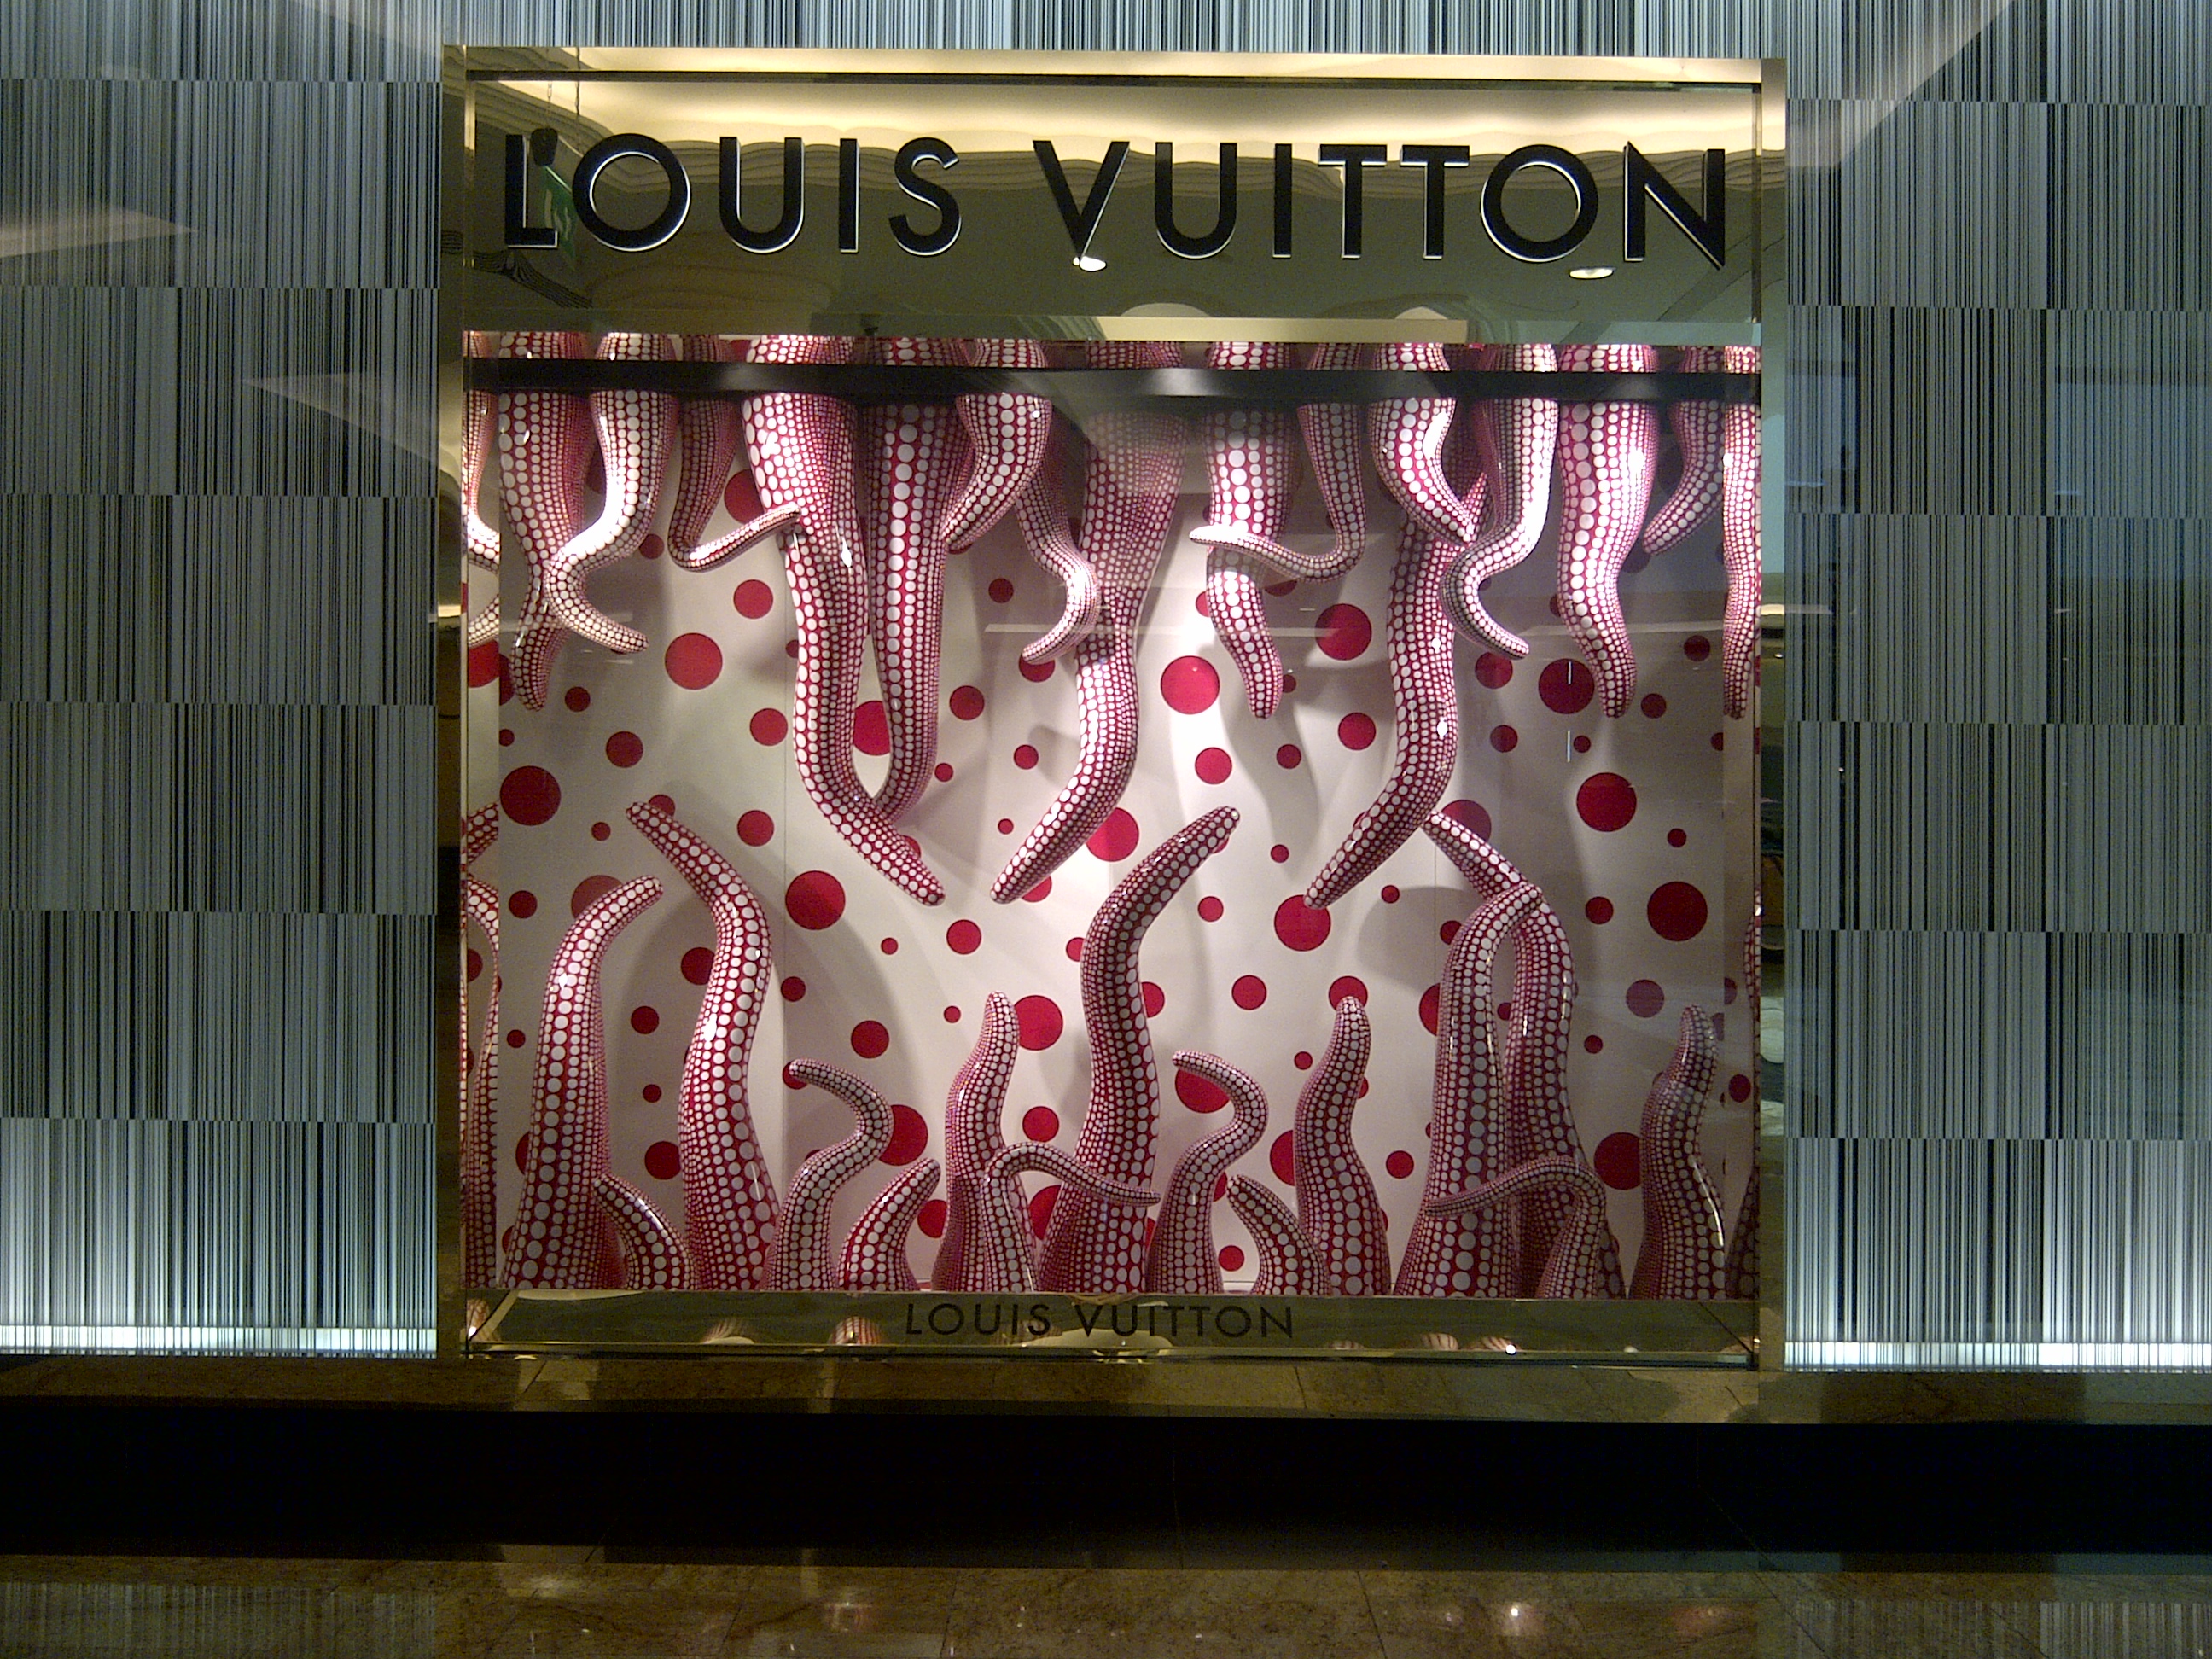 Louis Vuitton customization - Graffiti Dubai